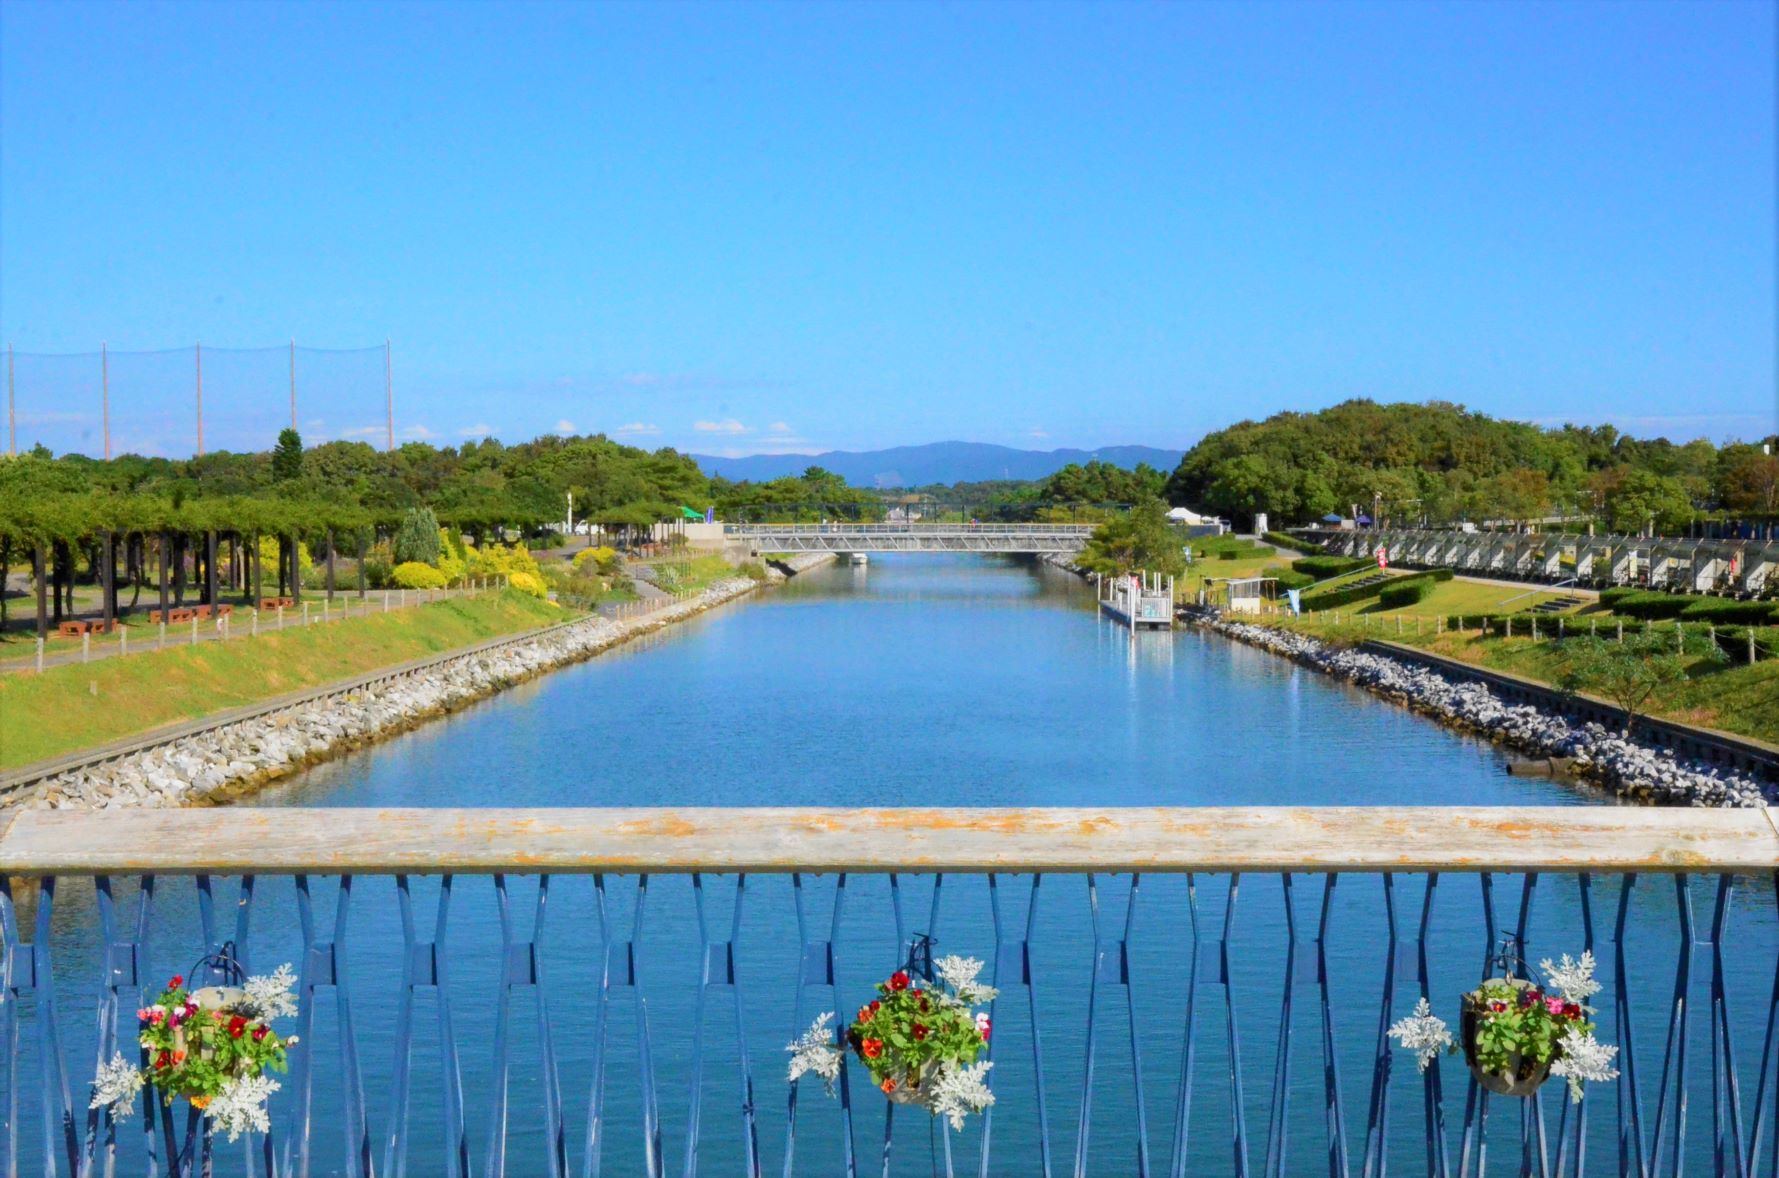 At Hamanako Garden Park's South Evo Bridge